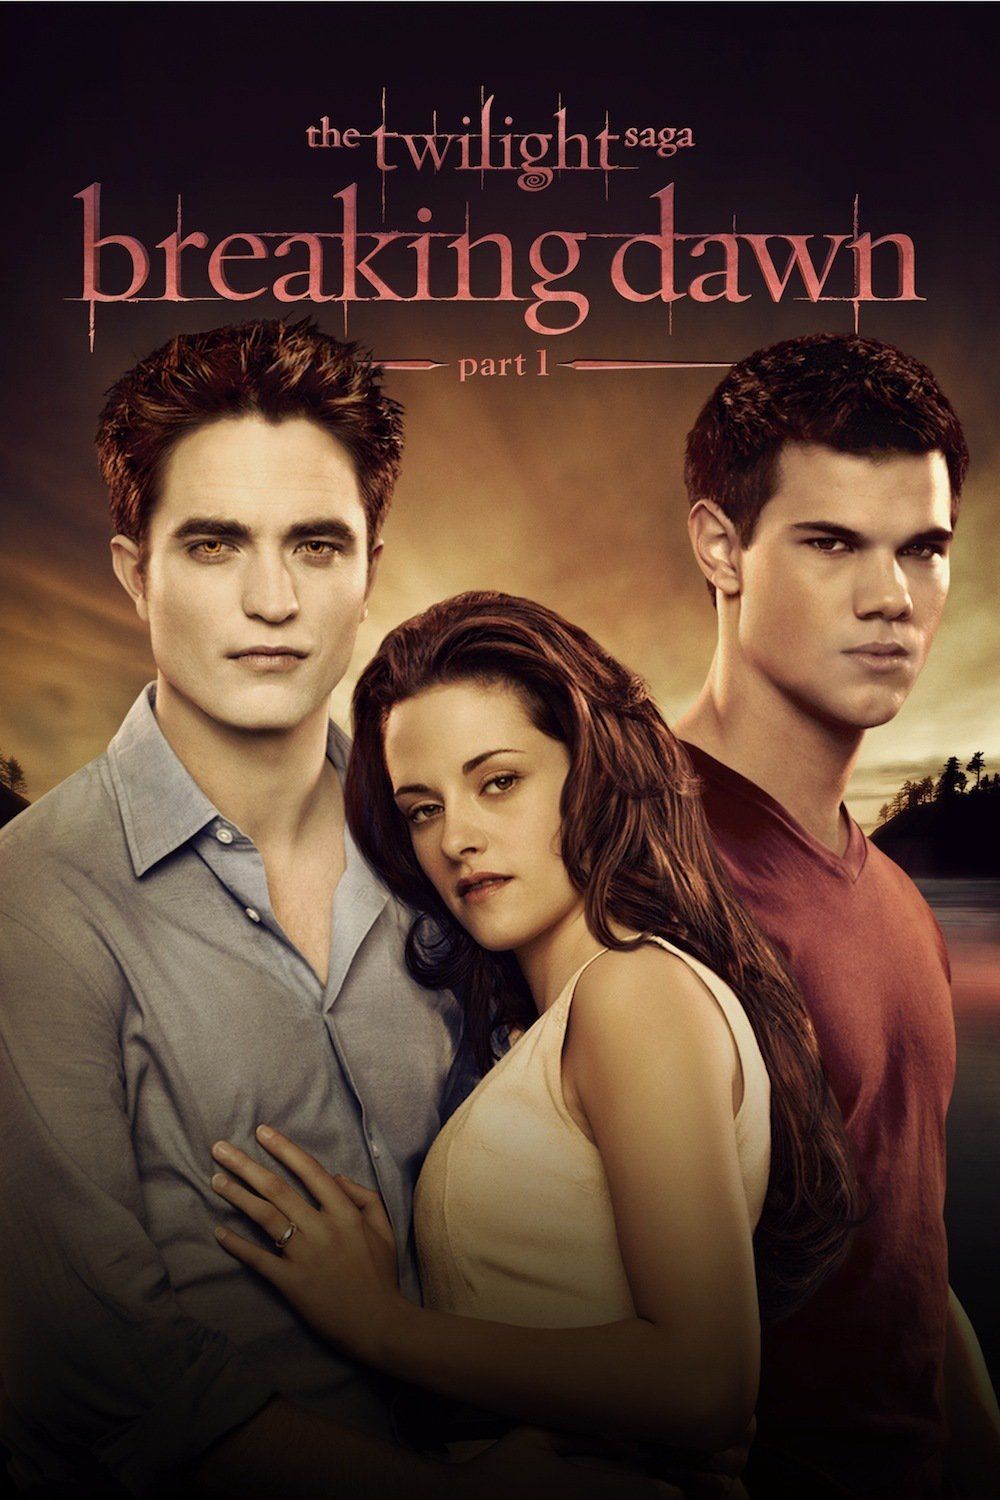 Twilight full movie free download mp4